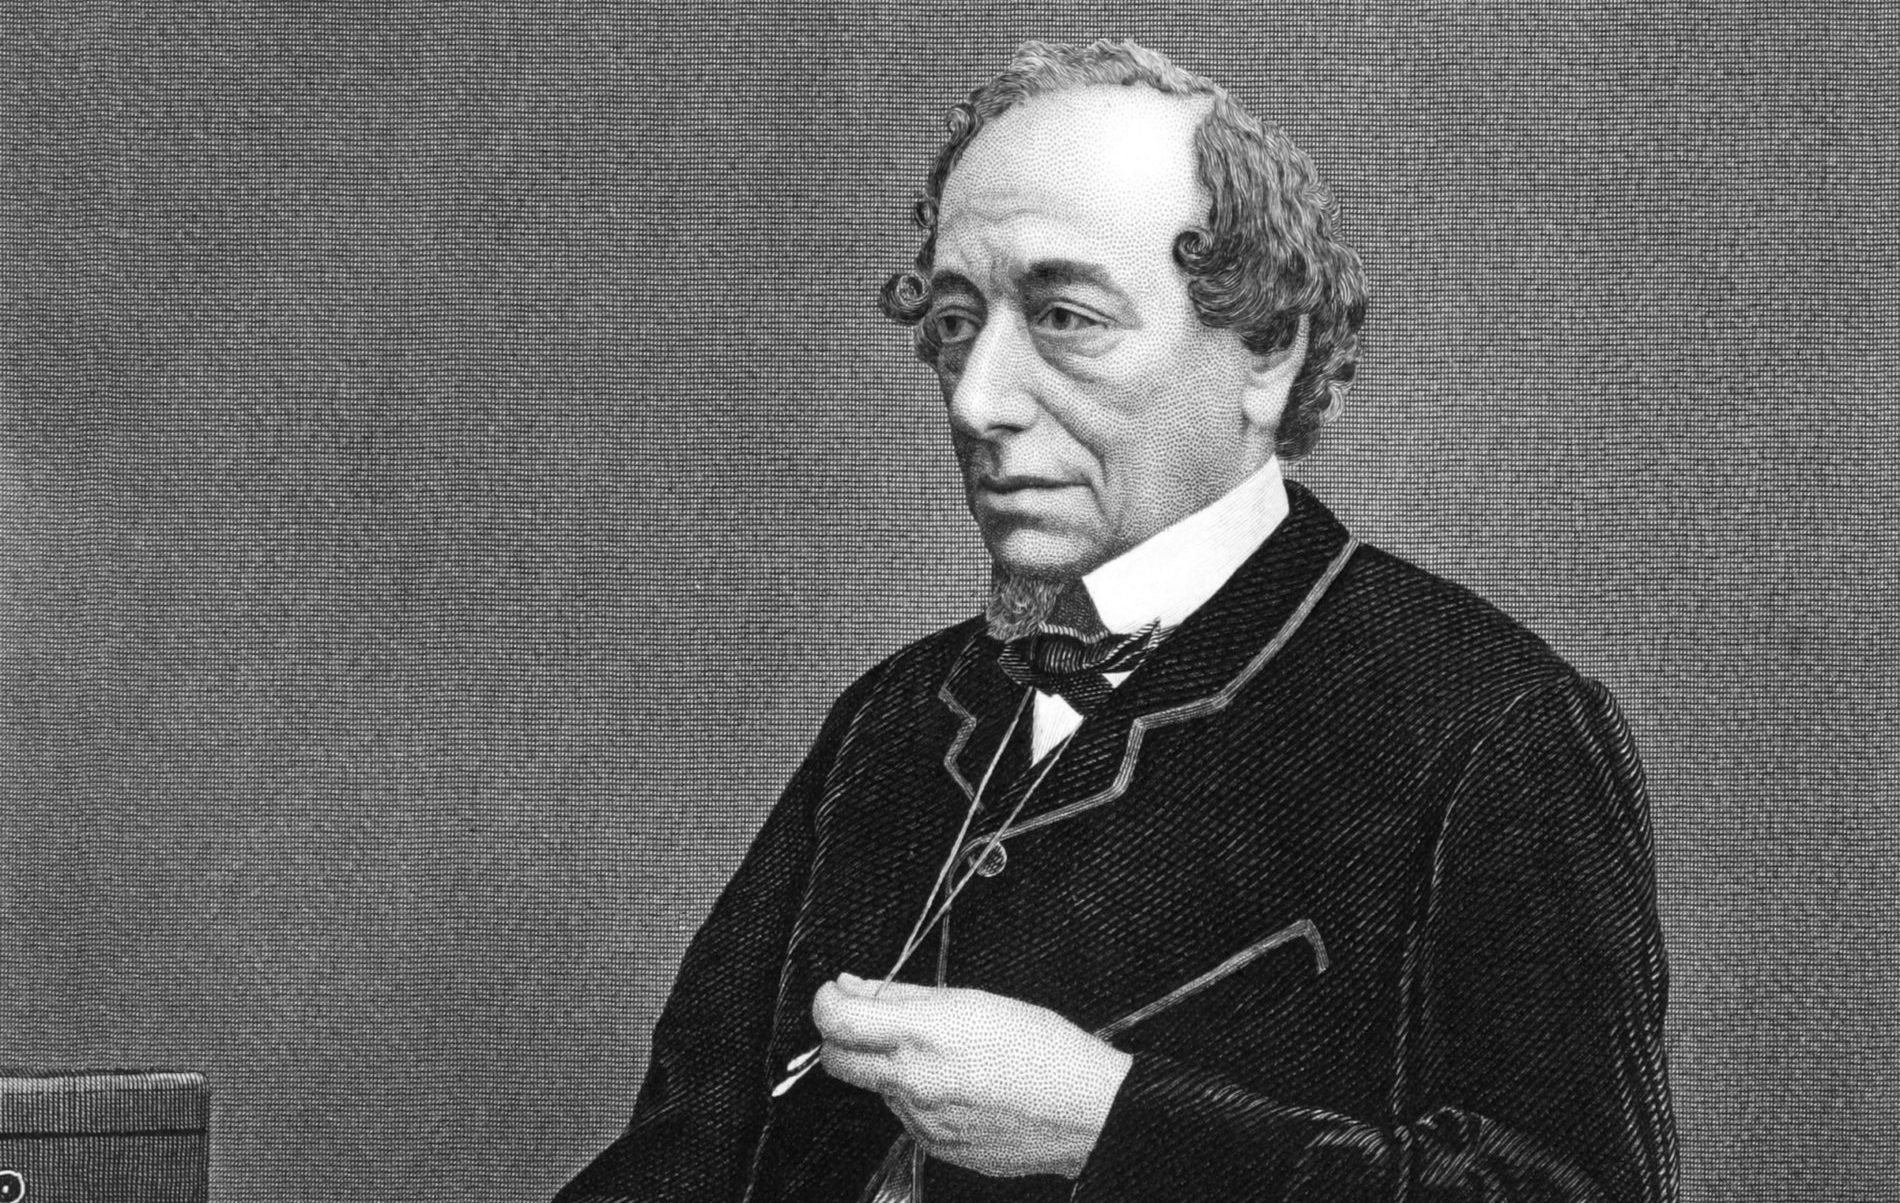 Where Is the Next Disraeli?